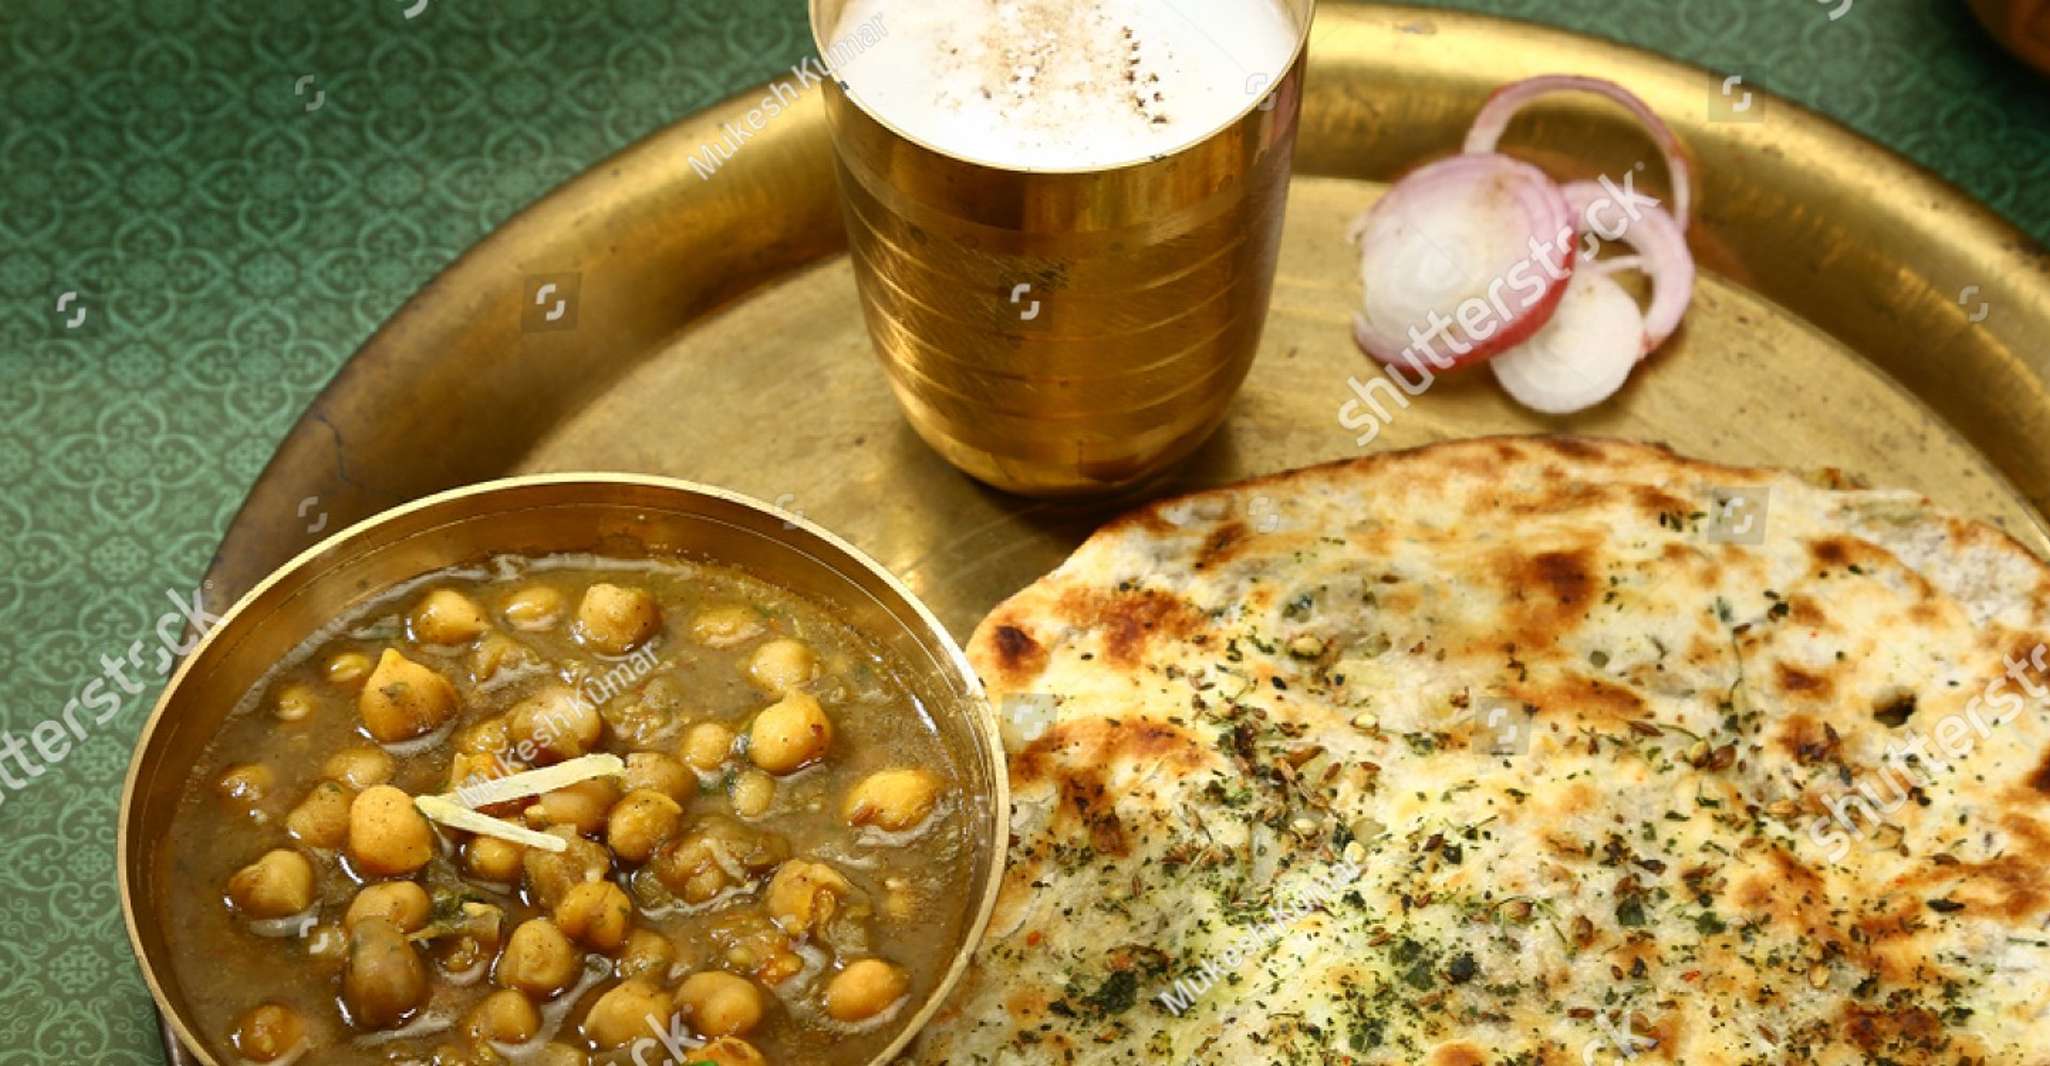 Amritsar Food Tour - Housity